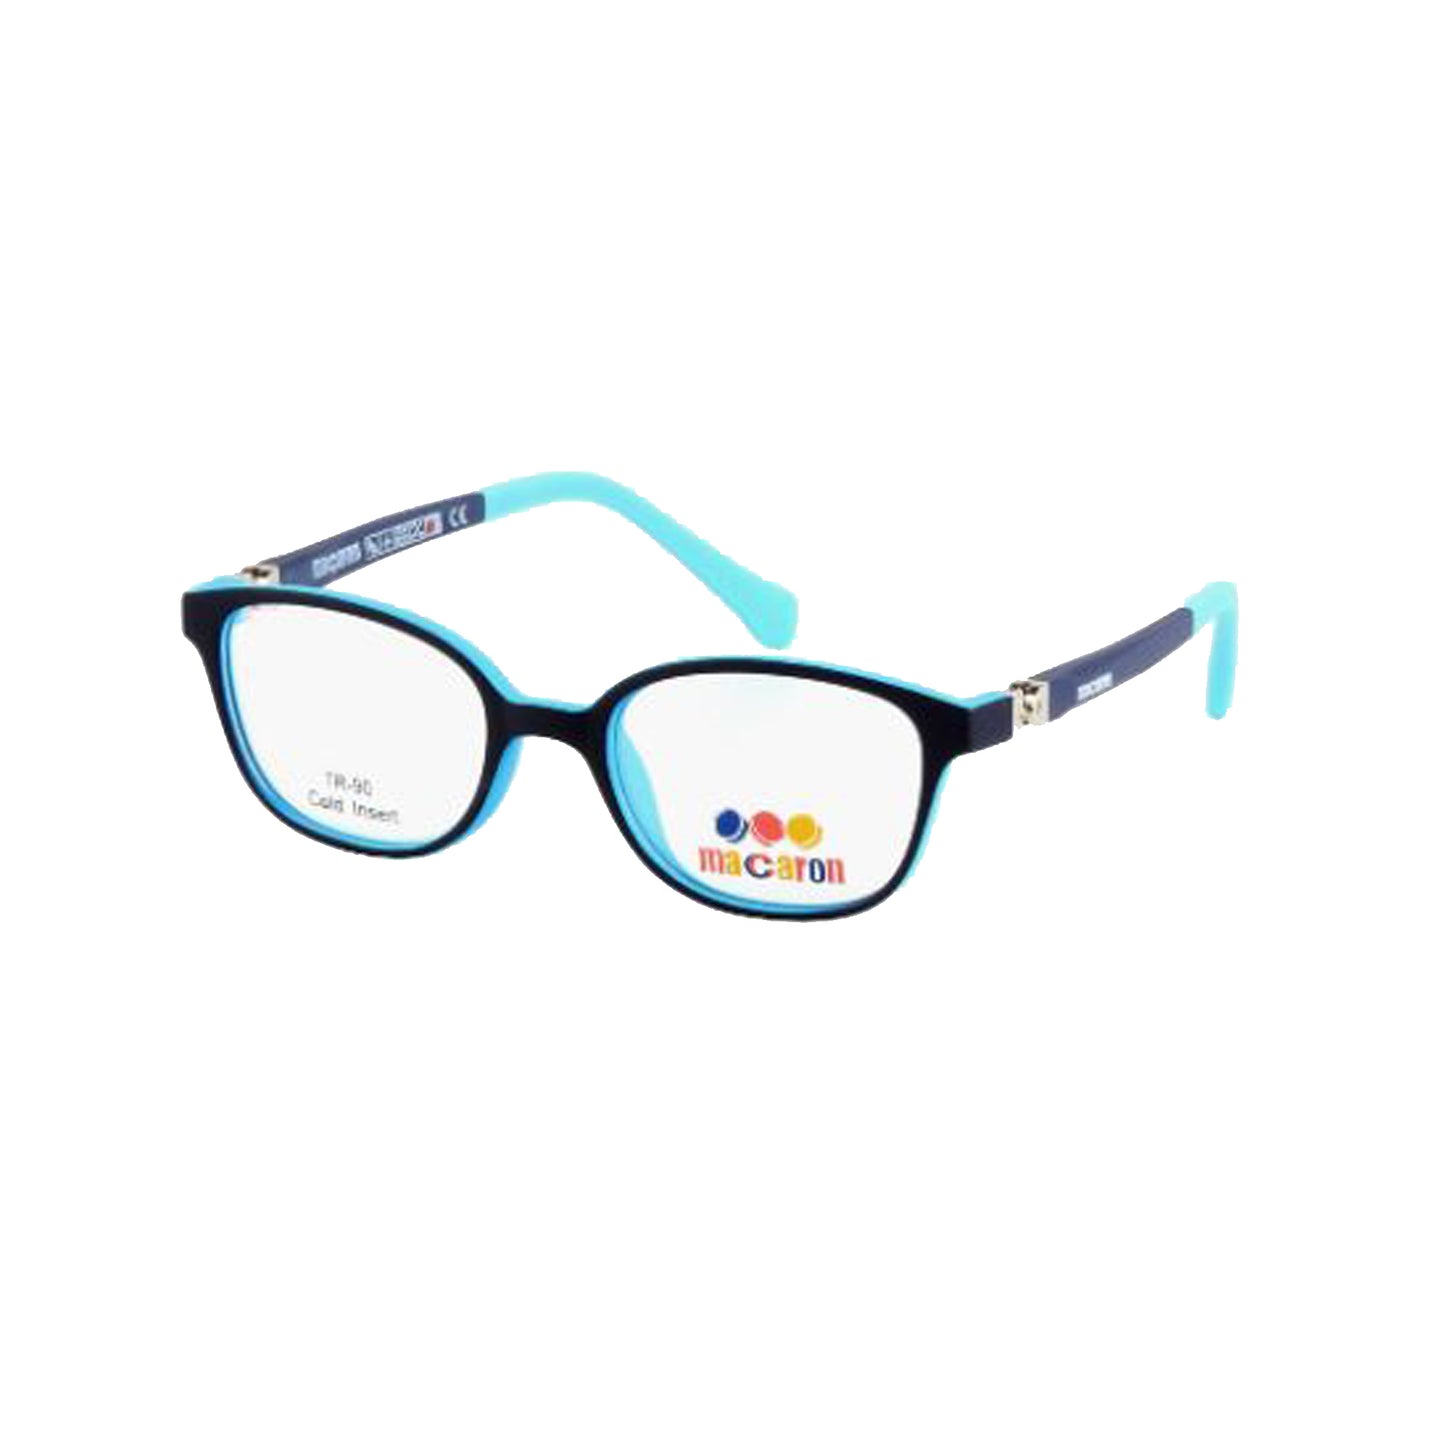 Macaron Blue Round Acetate Full Rim Eyeglasses for Kids